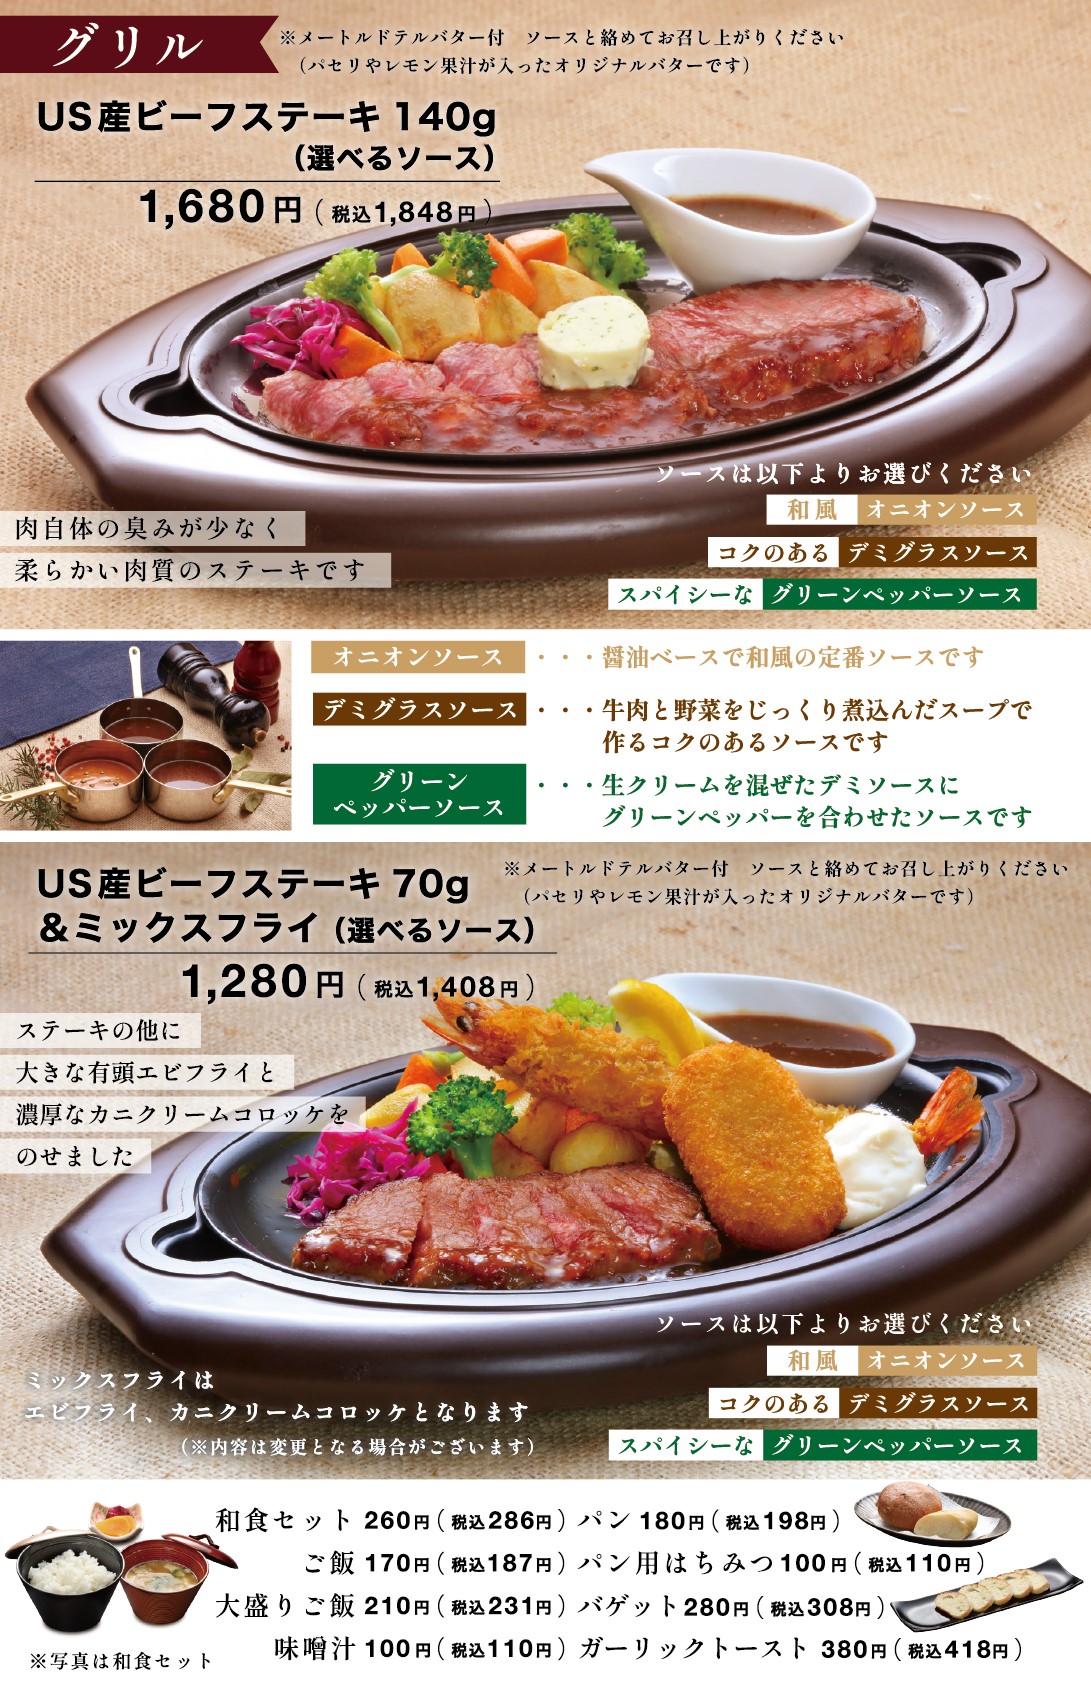 Dinner1_裏_2310 - コピー